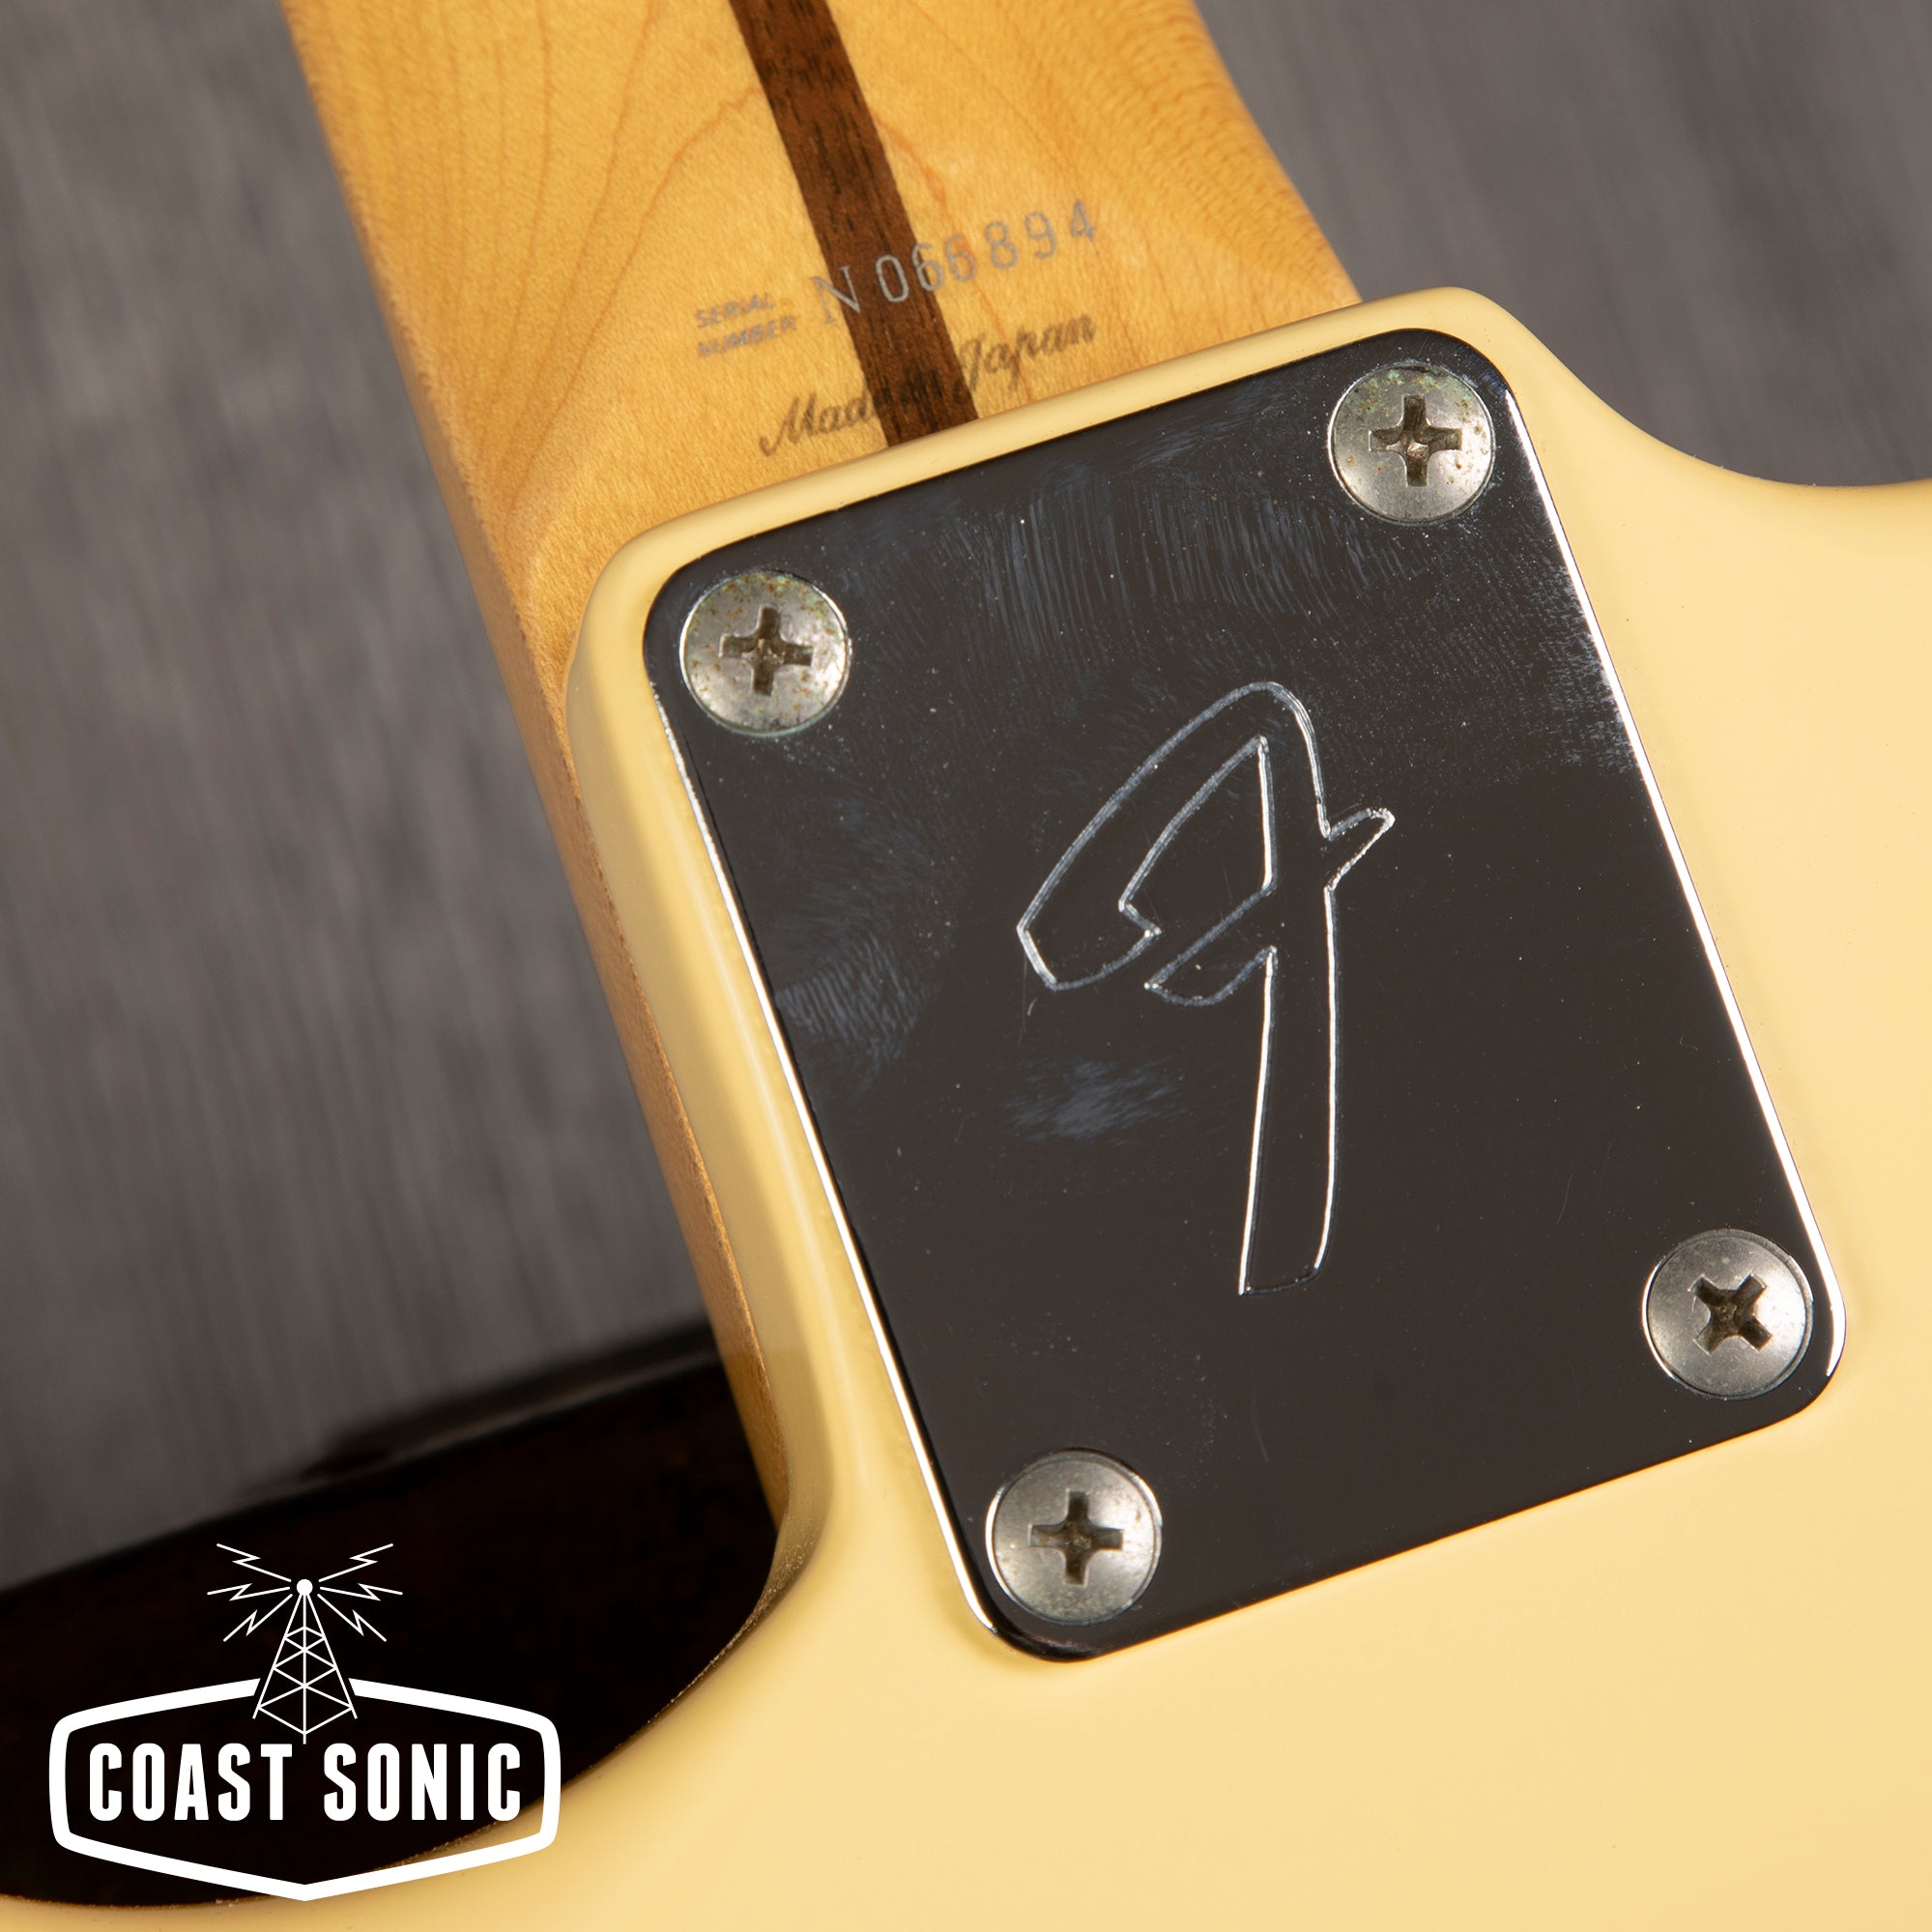 1997 Fender Yngwie Malmsteen Stratocaster ST71-140YM